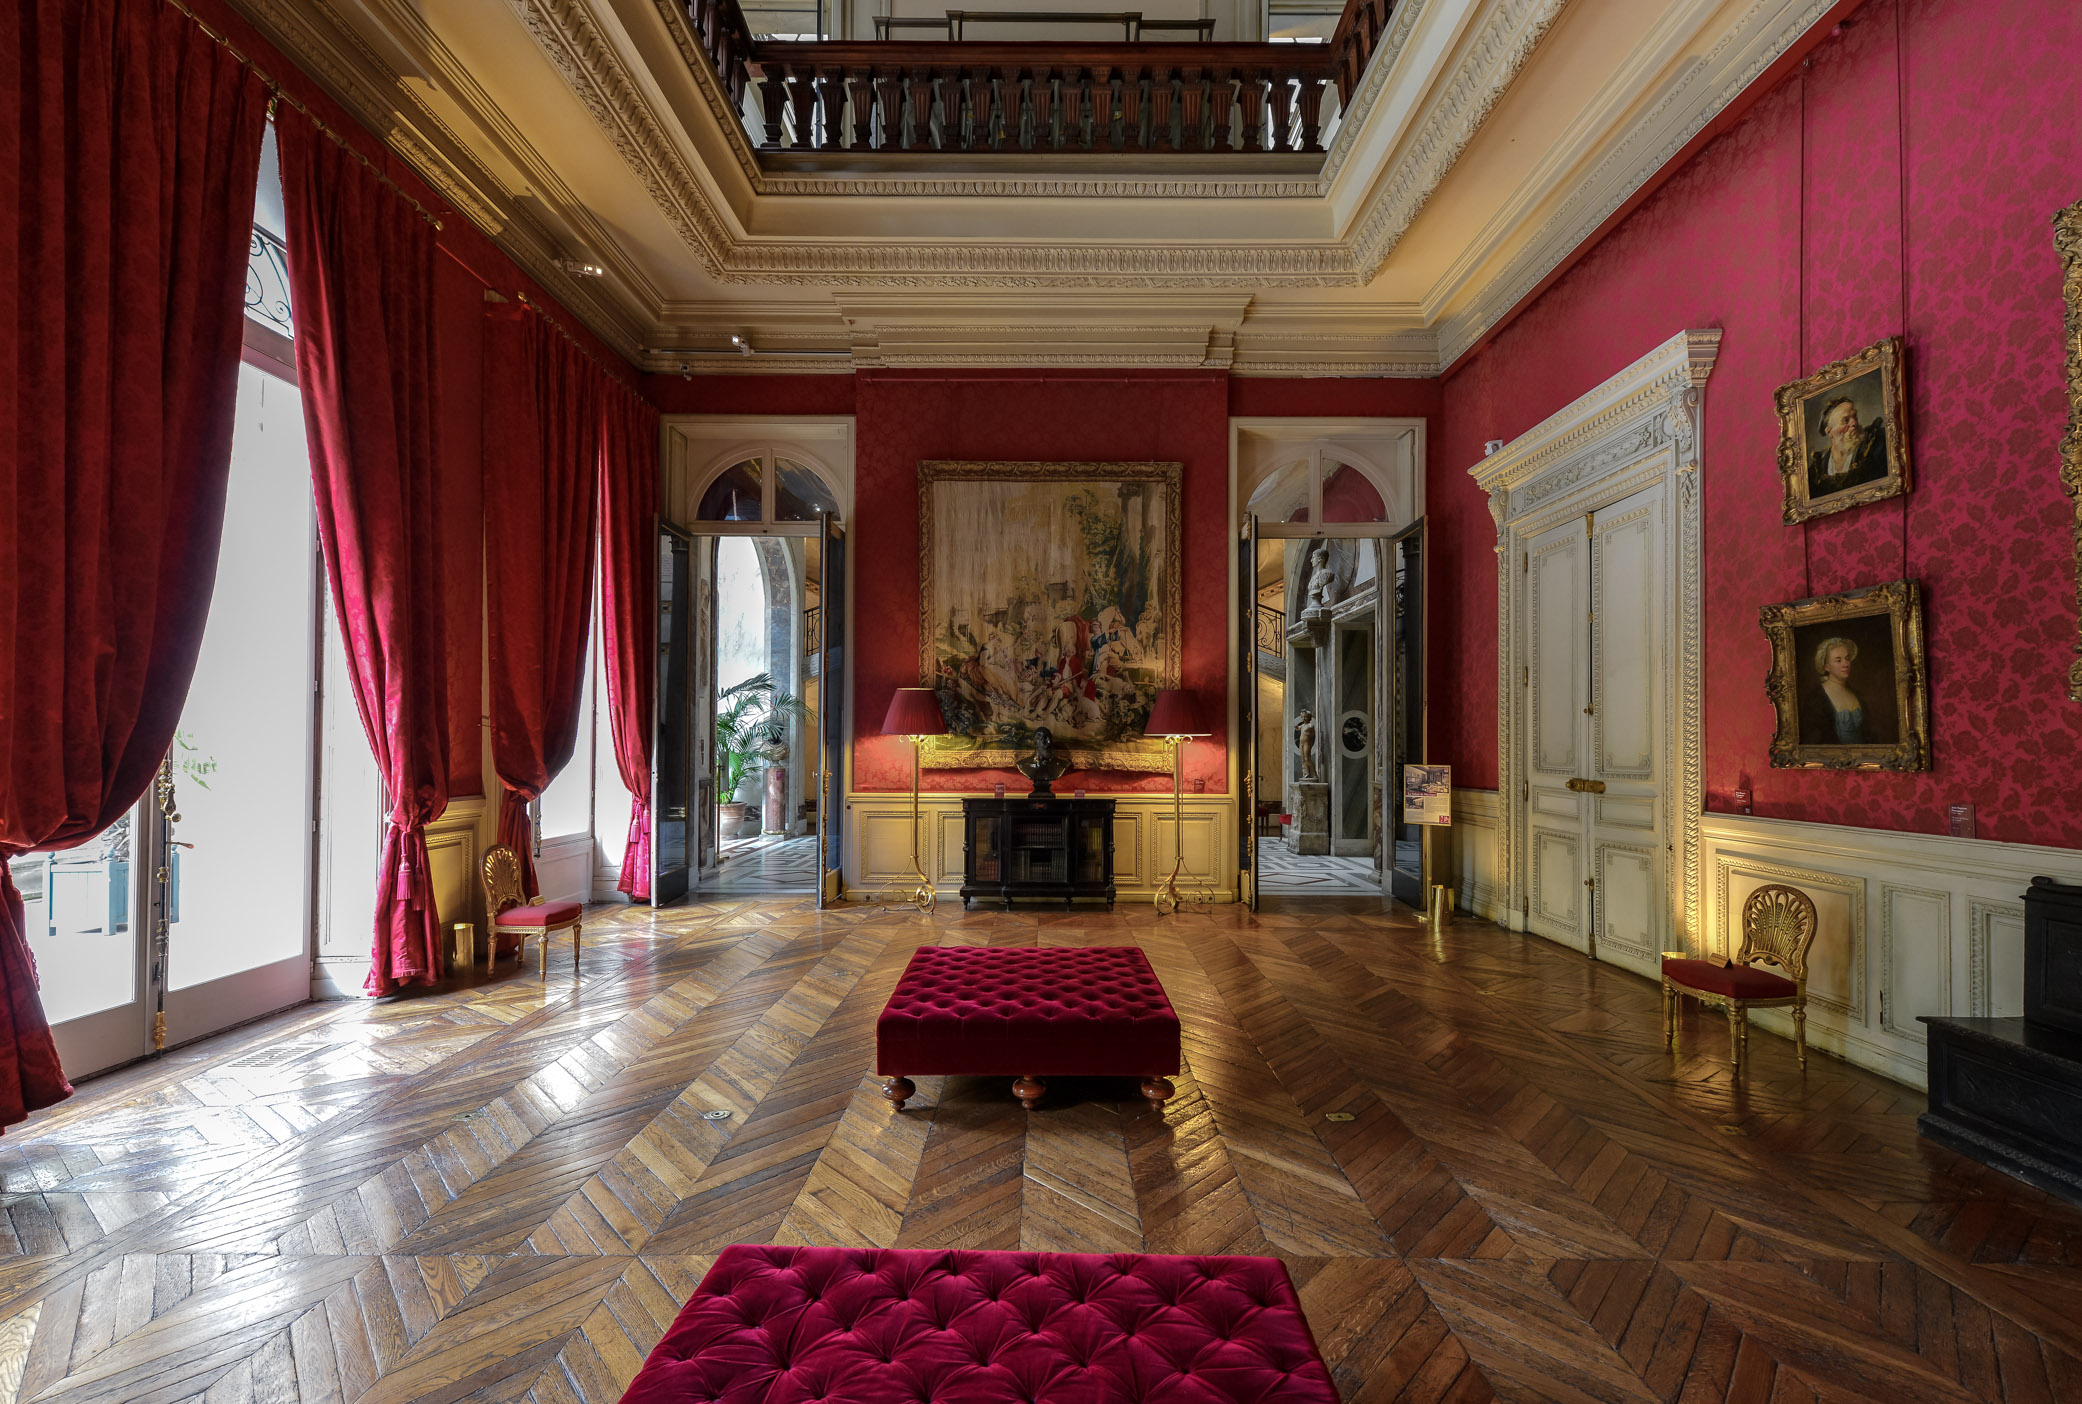 JacquemartAndré Museum, one of the most elegant museum in Paris